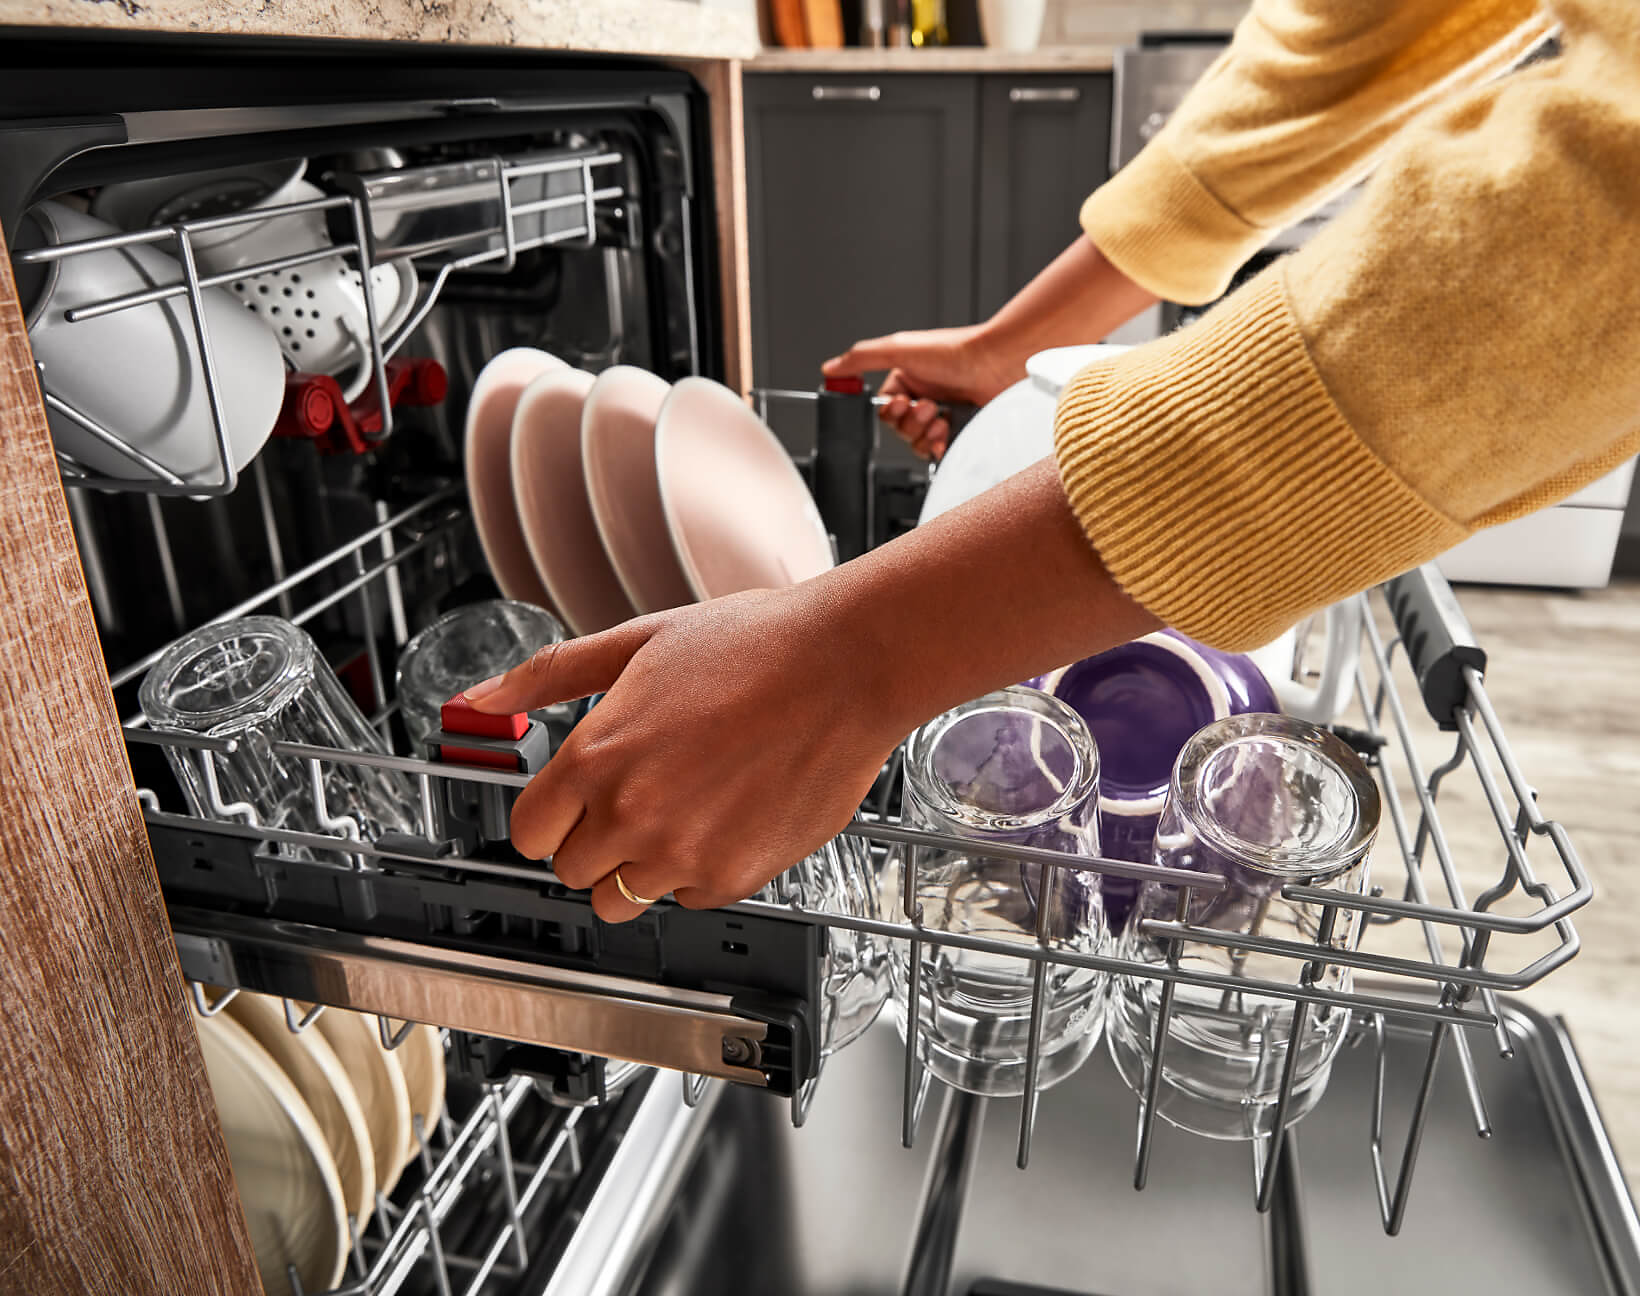 A person adjusting upper rack in a loaded dishwasher.